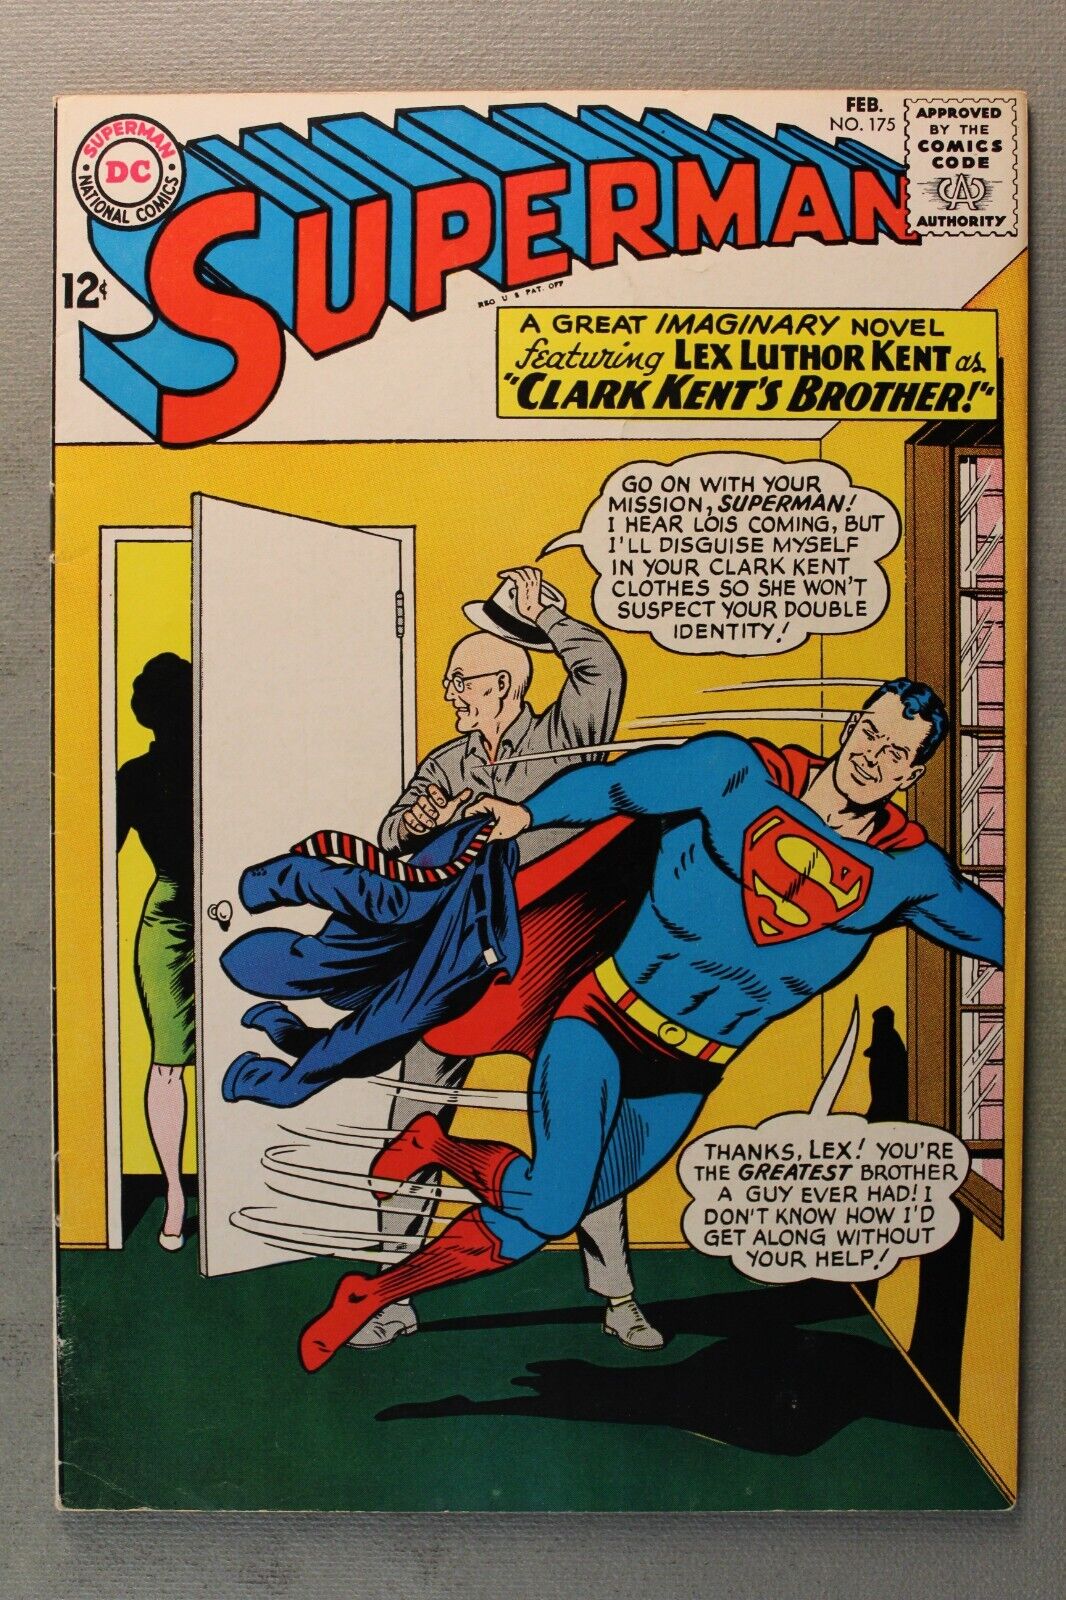 SUPERMAN No. 175 Feb. *65* featuring: Lex Luthor Kent as \